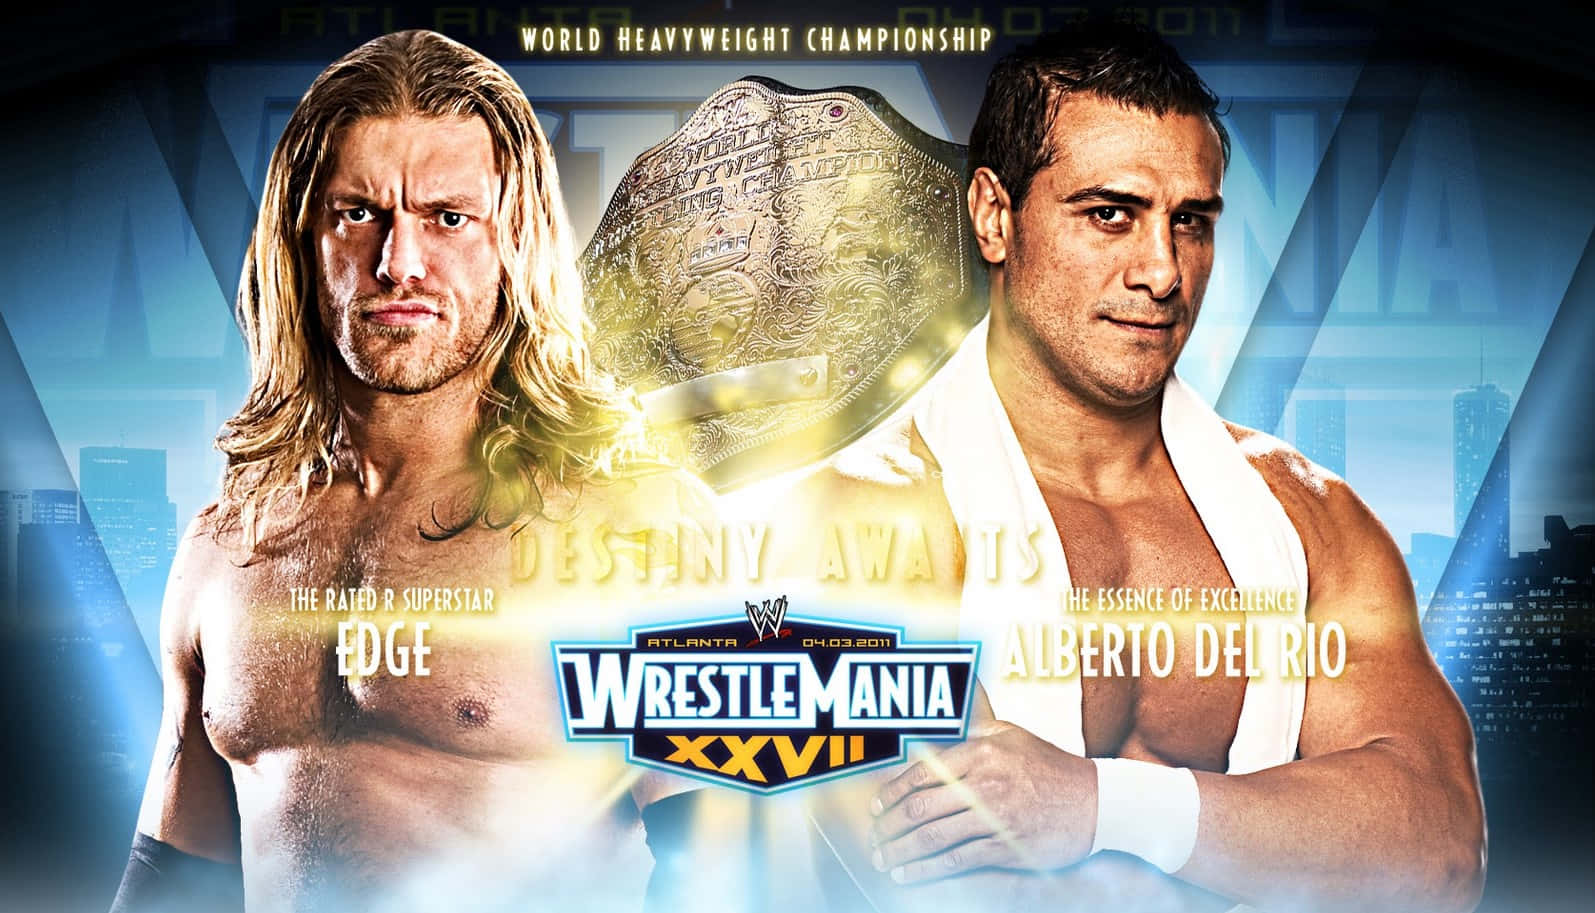 Edge vs. Alberto Del Rio Wrestlemania XXVII. Wallpaper